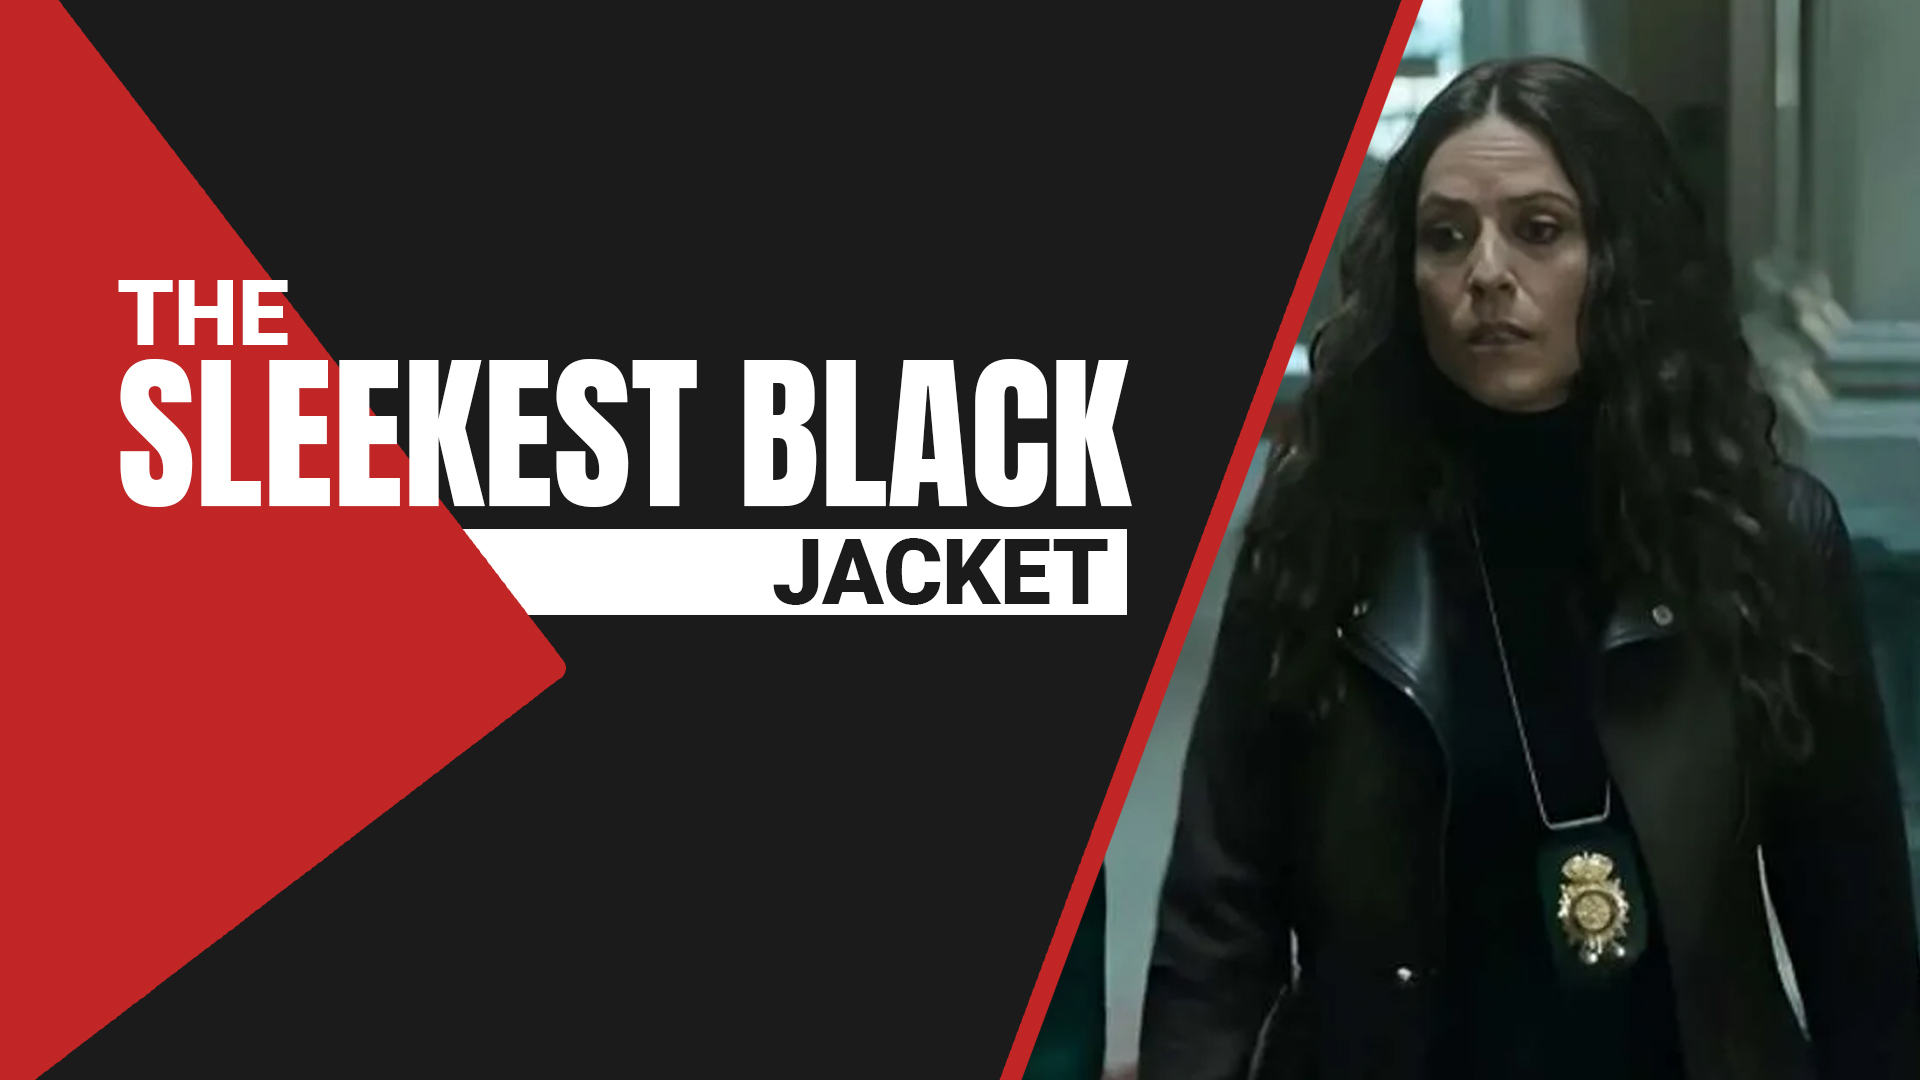 The Sleekest Black Jacket